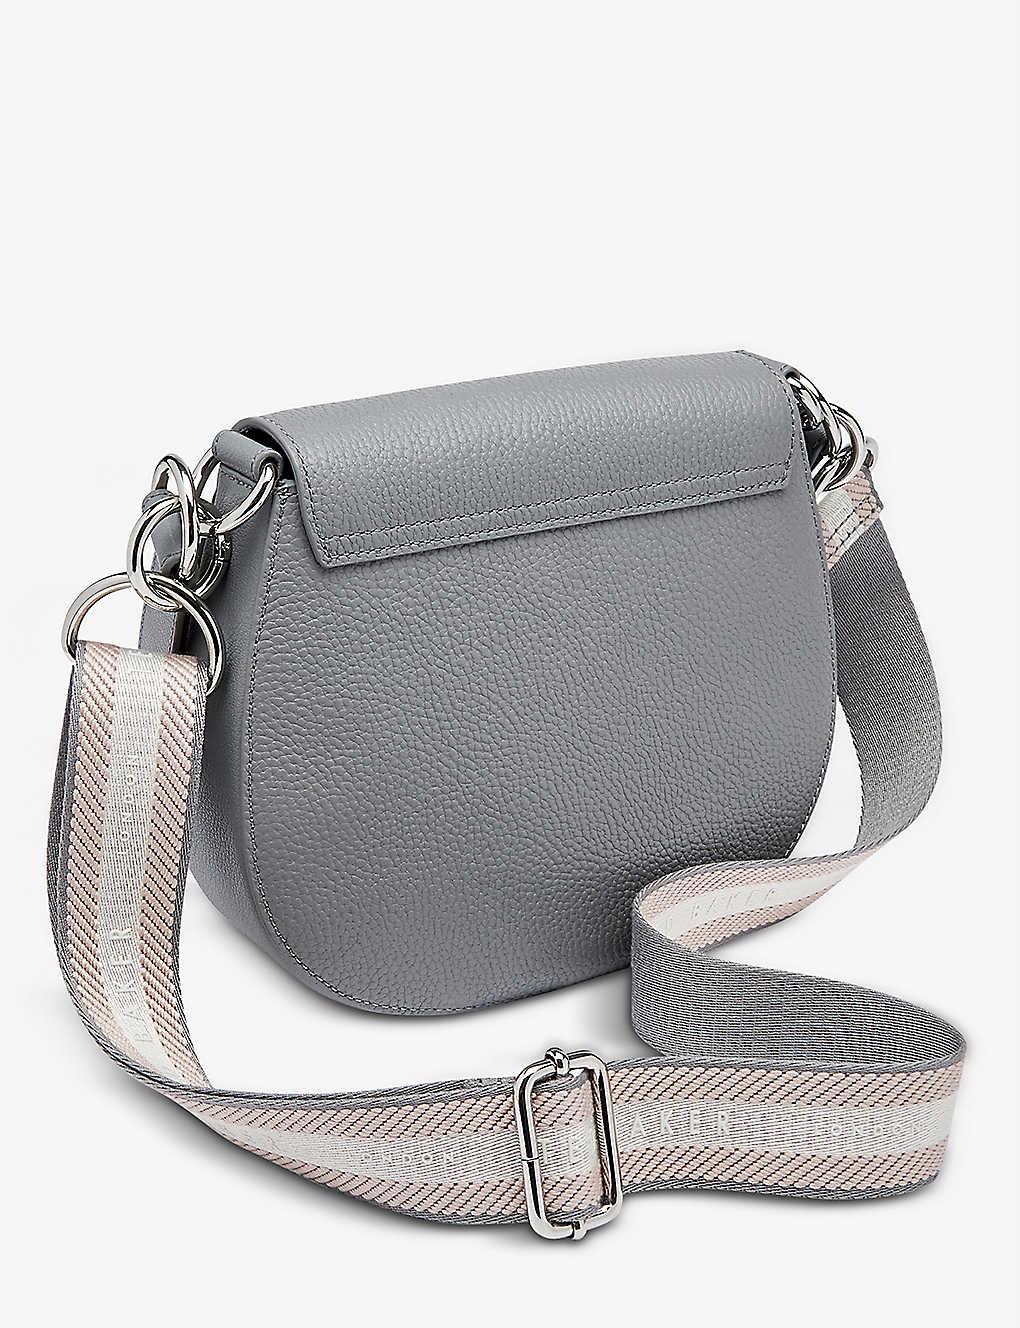 Ted Baker Crossbody Bag For Women - Grey: Buy Online at Best Price